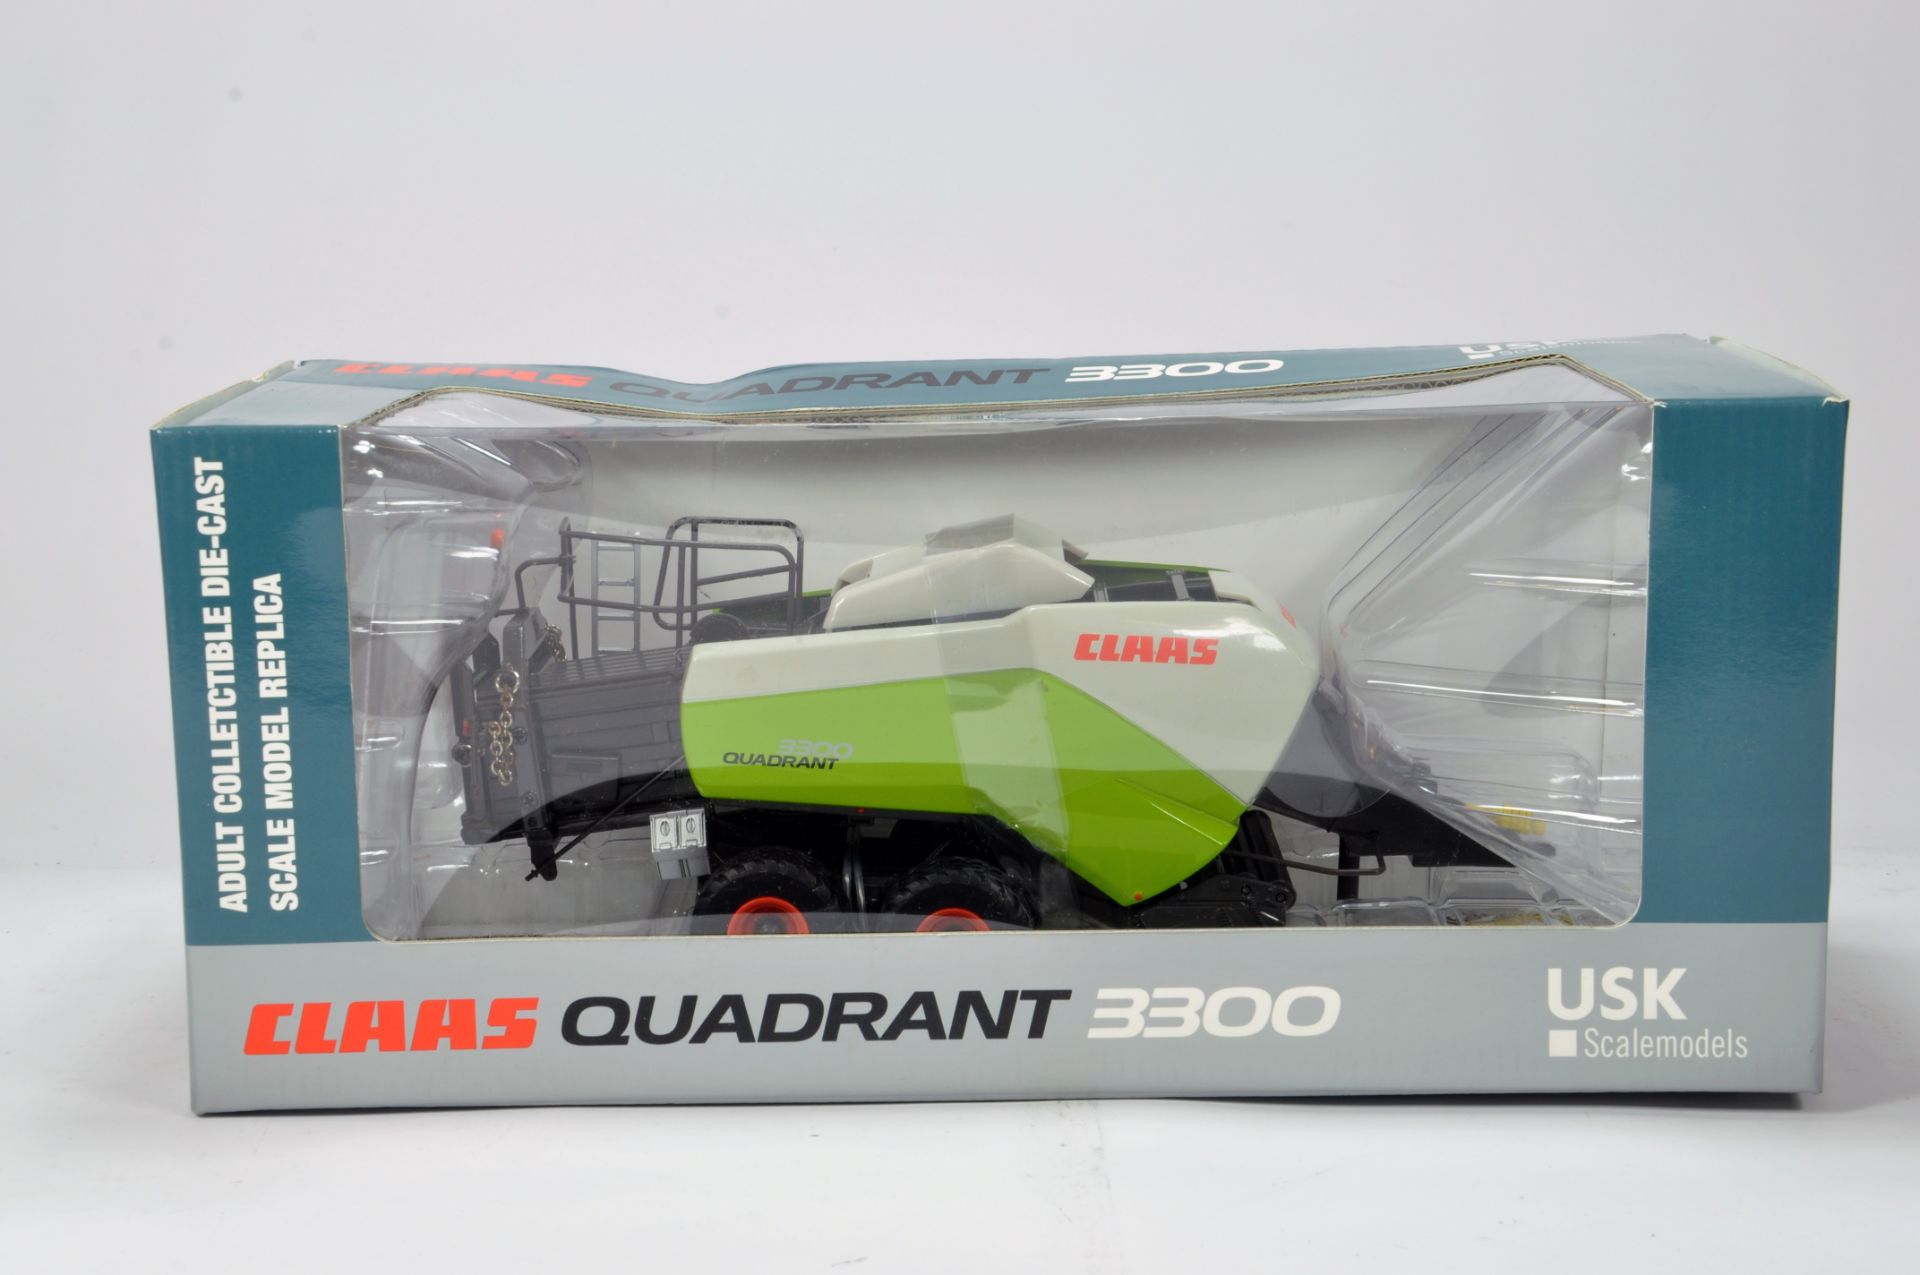 USK 1/32 Farm Diecast model comprising Claas Quadrant 3300 Baler. NM to M in Box.